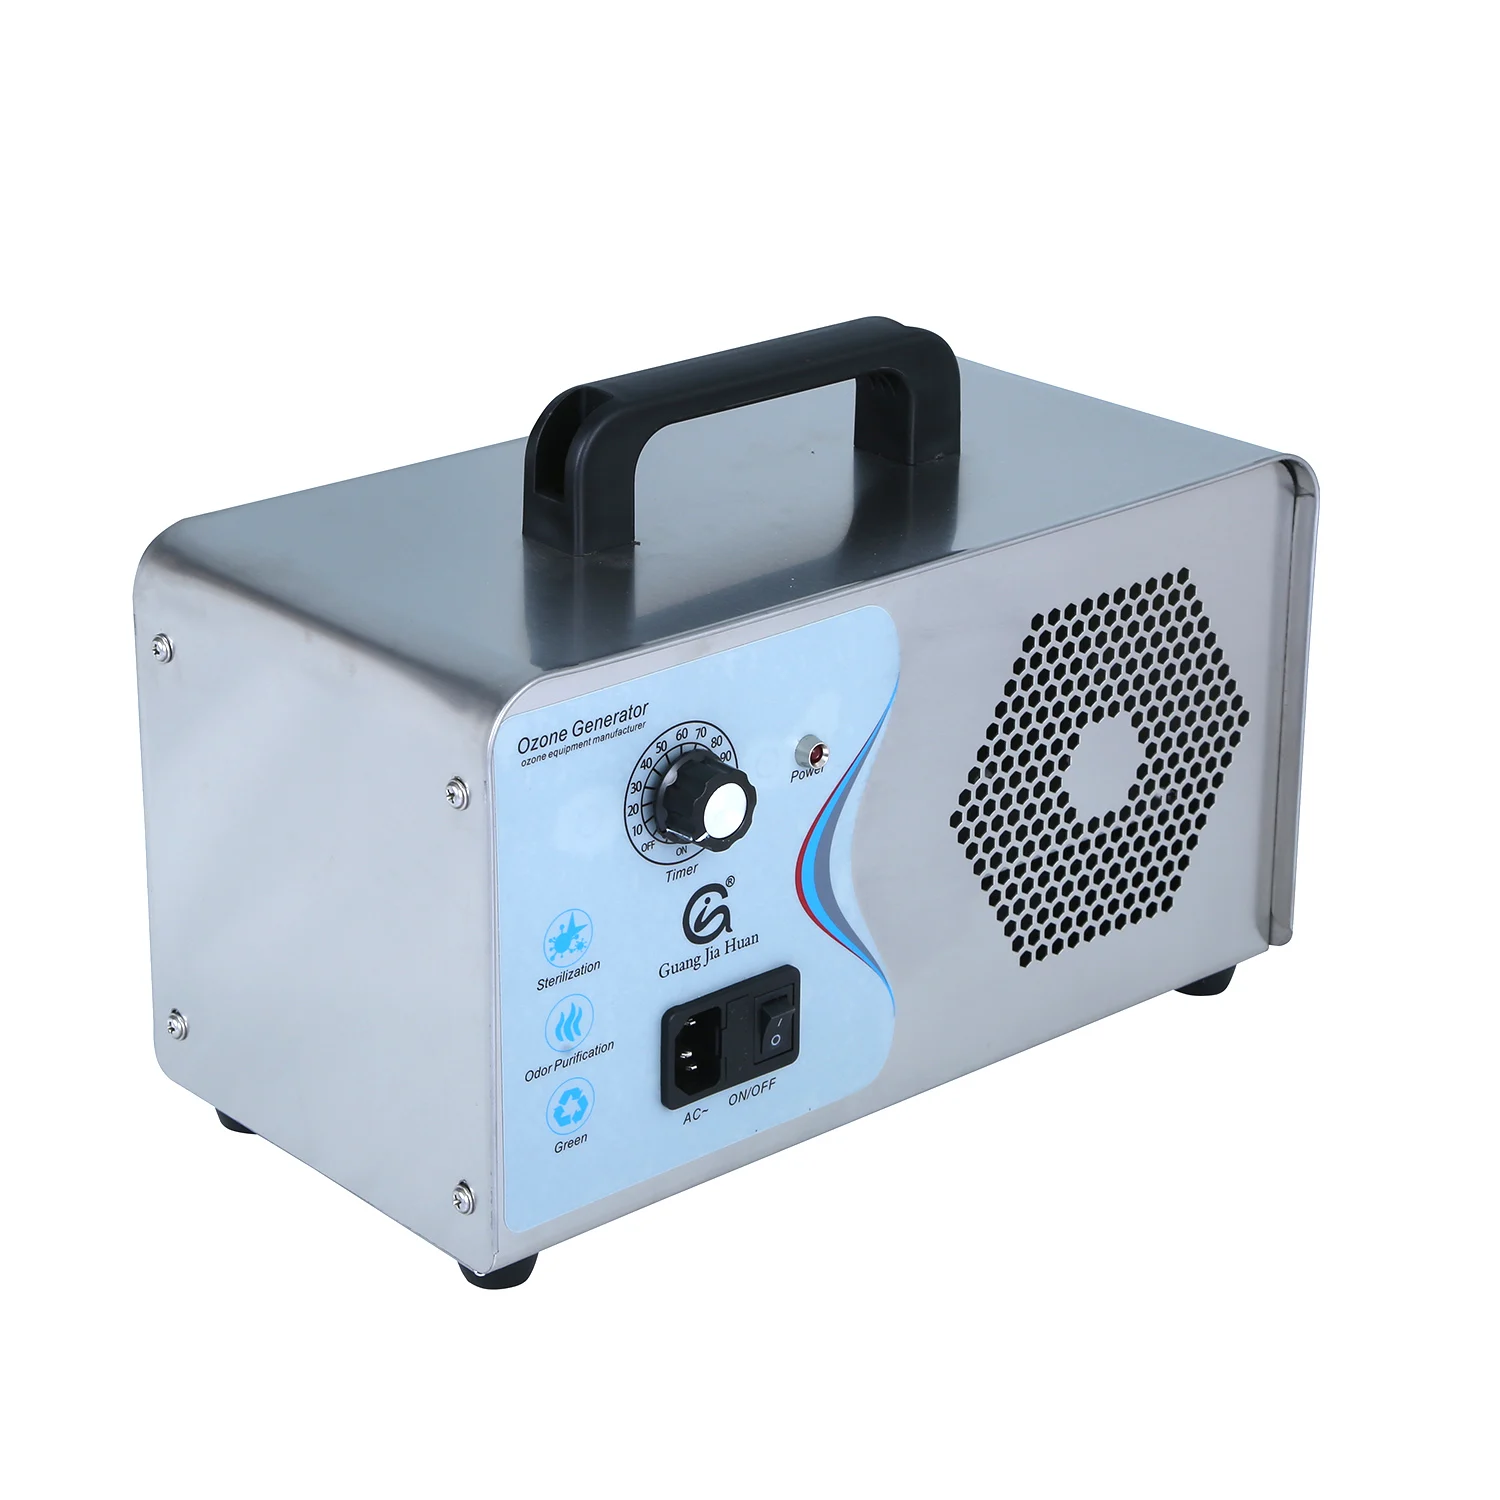 20g Ozone Generator Home Use Sterilizing Ozonator Air Purification